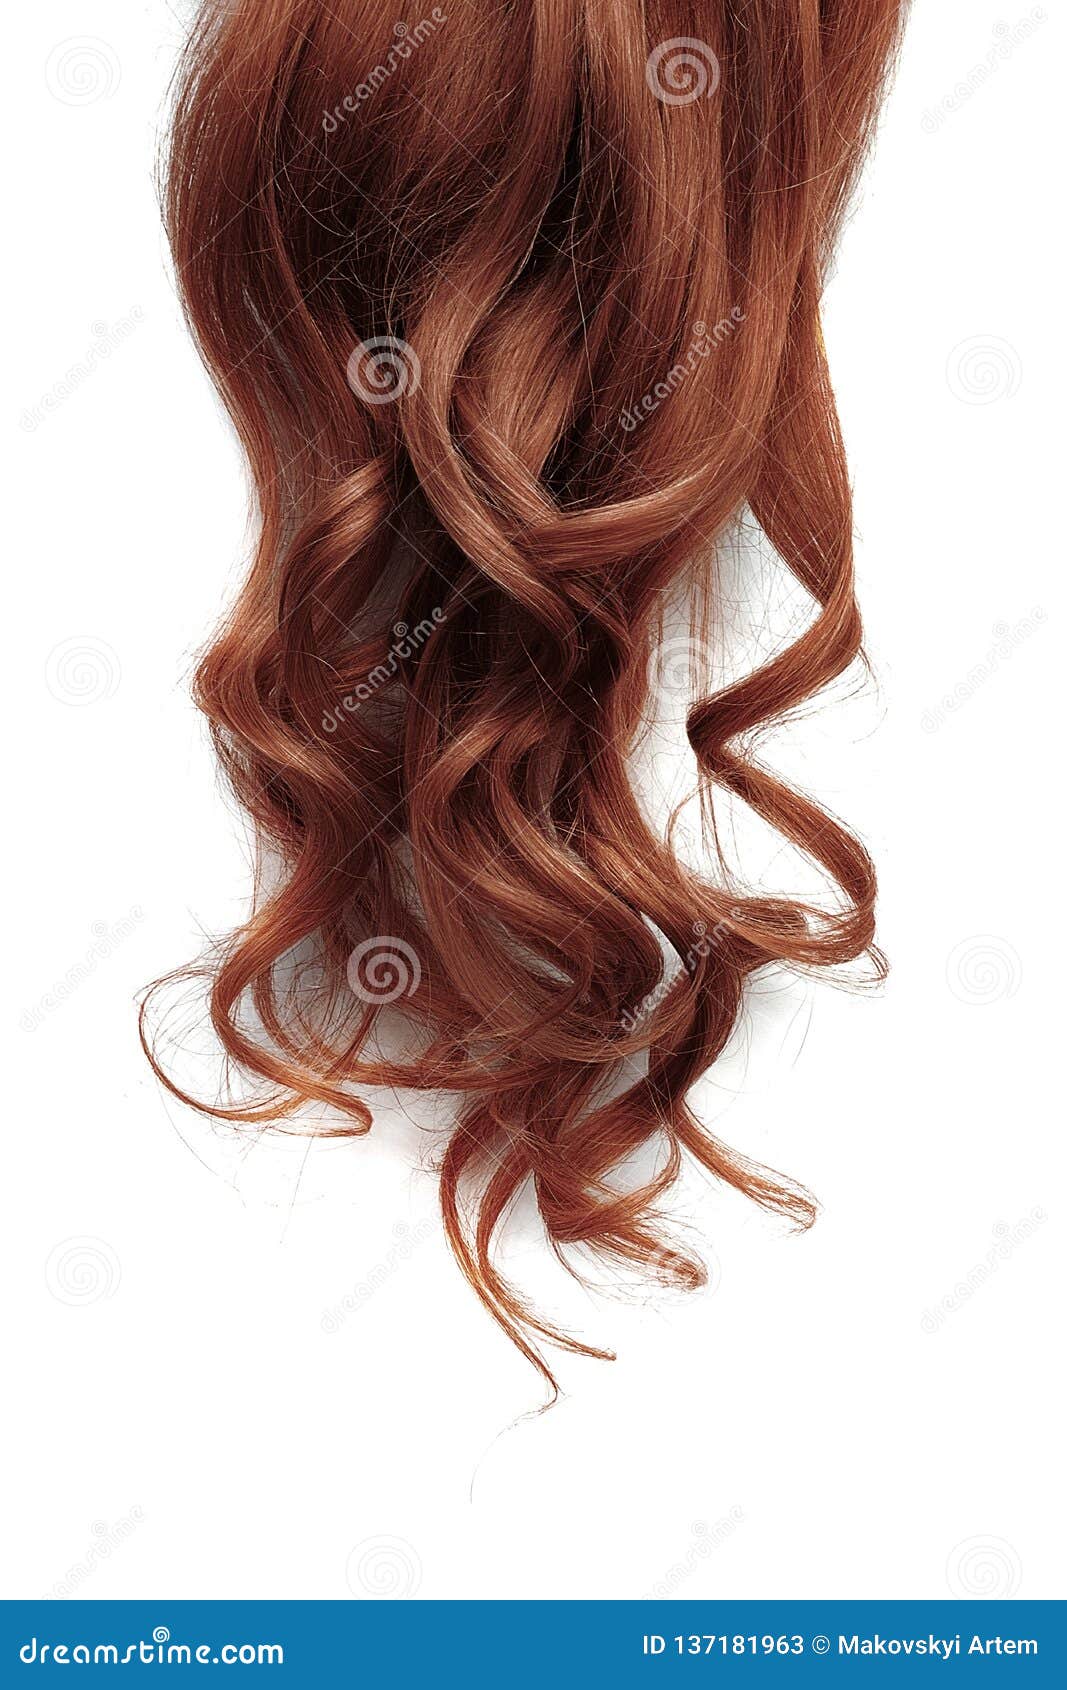 Long Wavy Henna Hair Isolated on White Background Stock Image - Image of  lock, clipart: 137181963